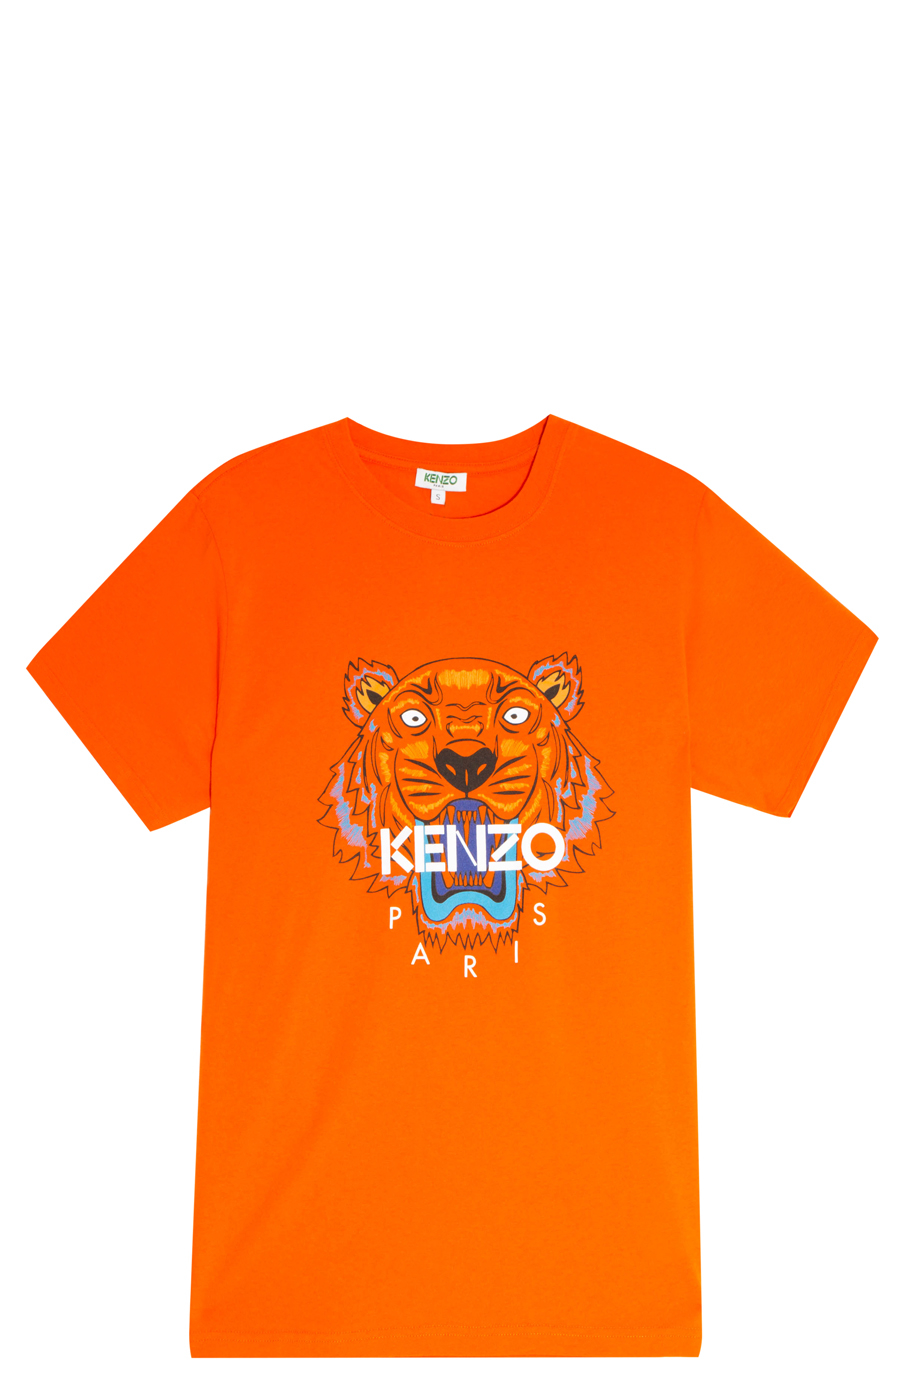 KENZO Iconic Tiger T-shirt in Orange 